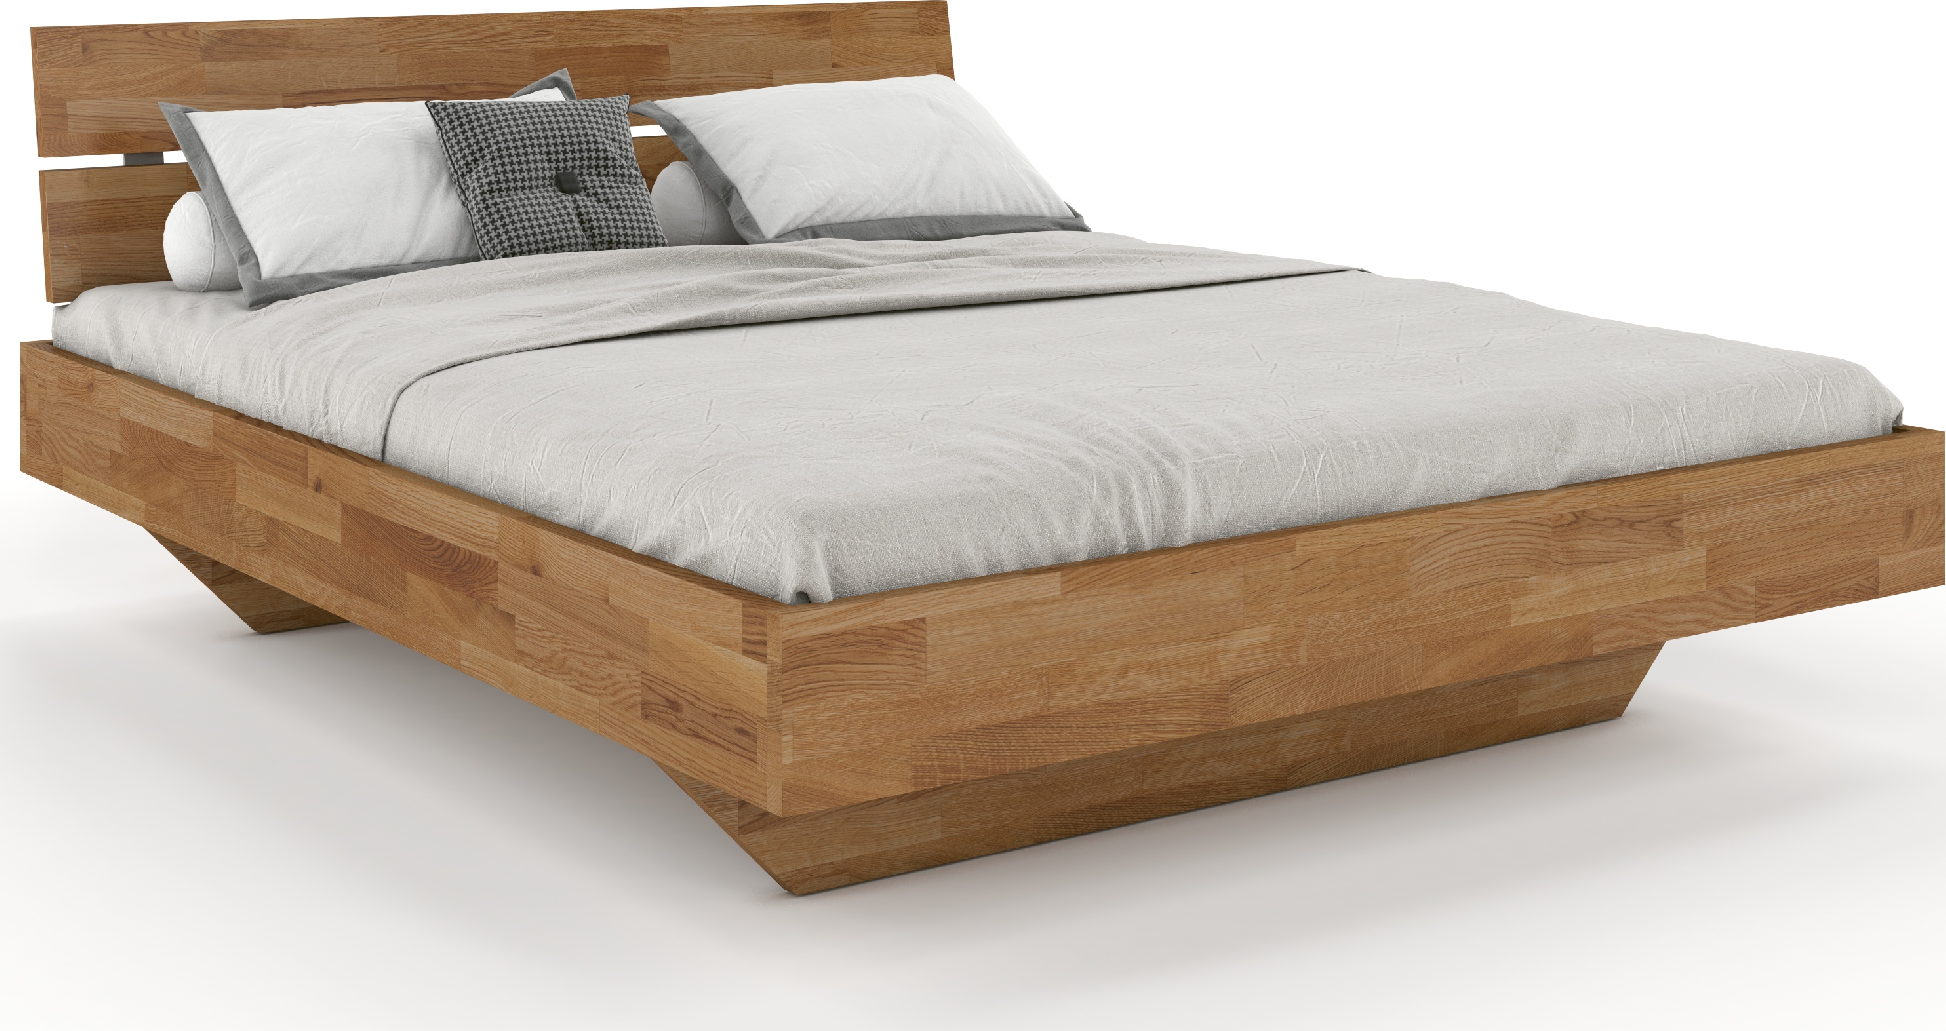 Dubová postel Fred Style 140x200 cm, dub, masiv